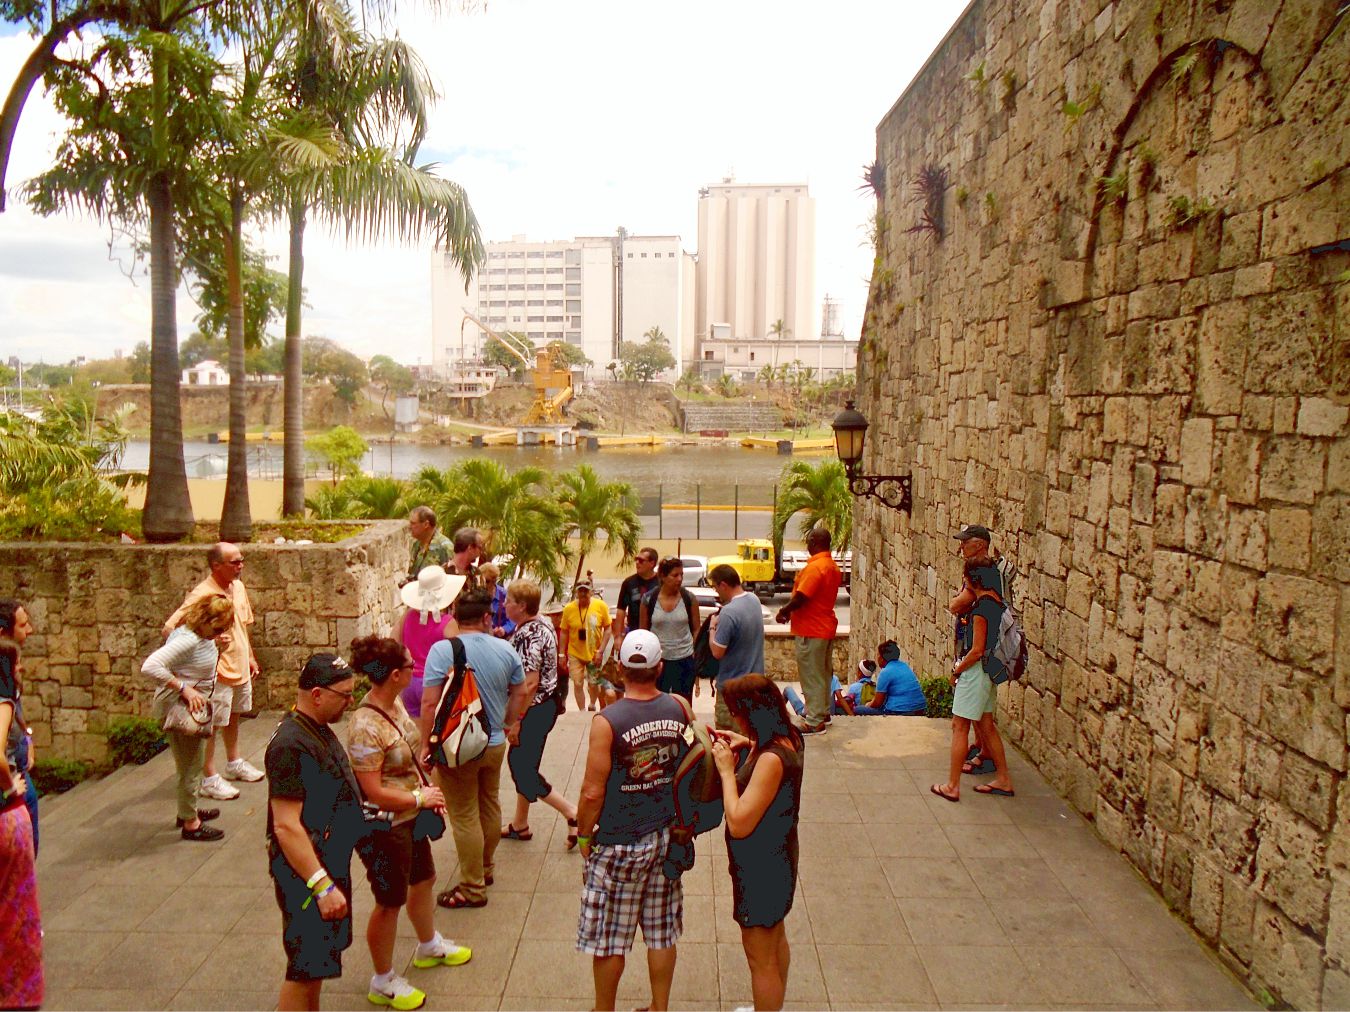 Downtown Santo Domingo rally point